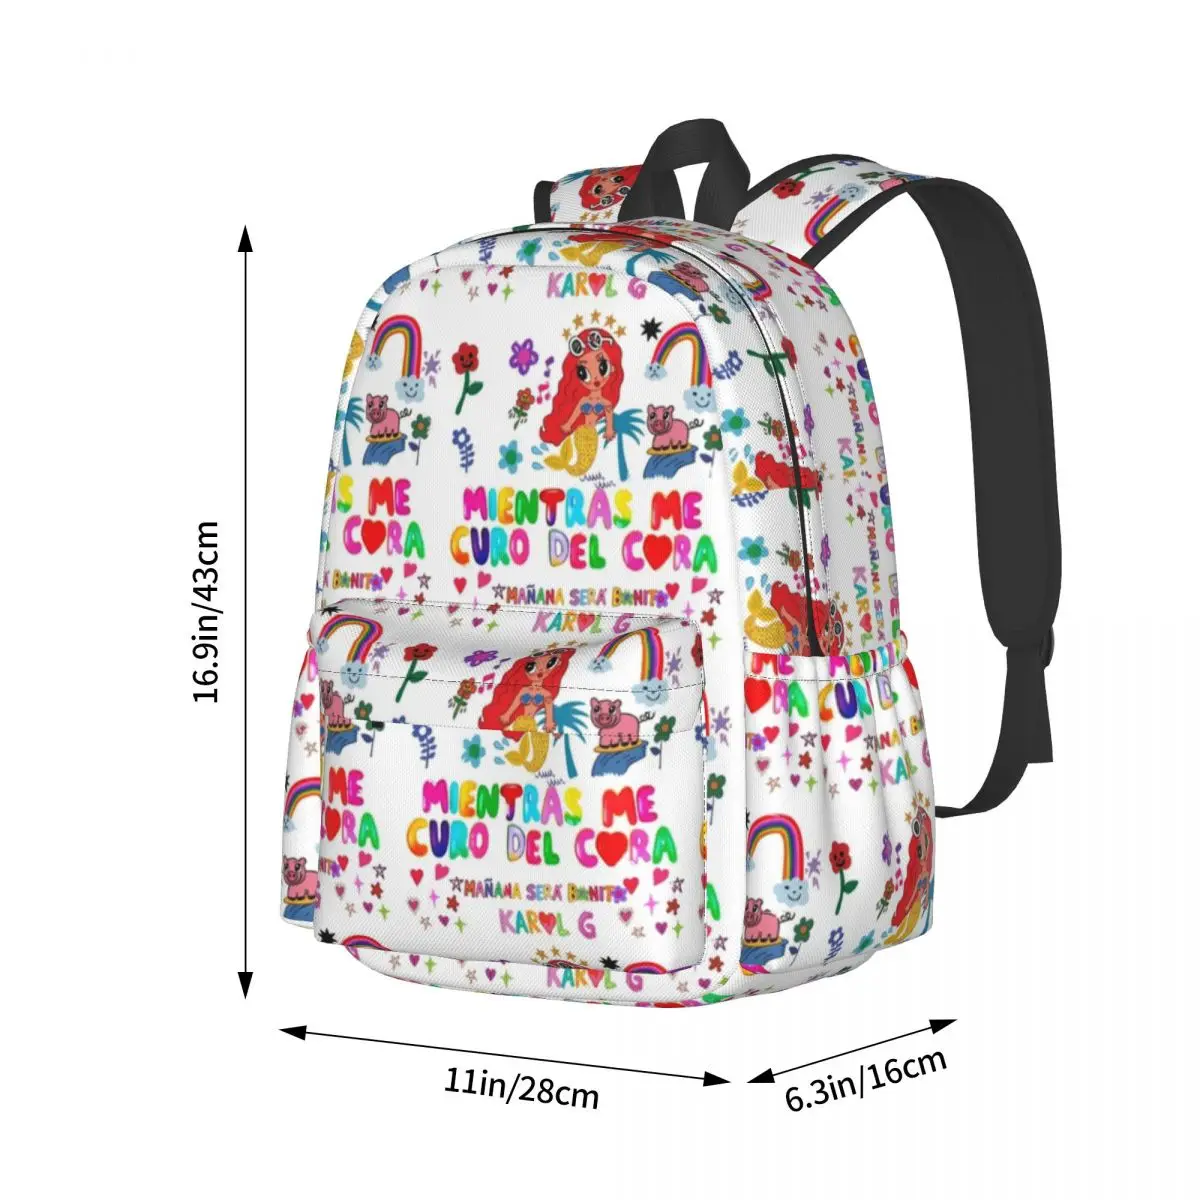 Karol G Heart Backpack Cartoon Colorful Trekking Backpacks Student Unisex Designer Breathable High School Bags Fashion Rucksack